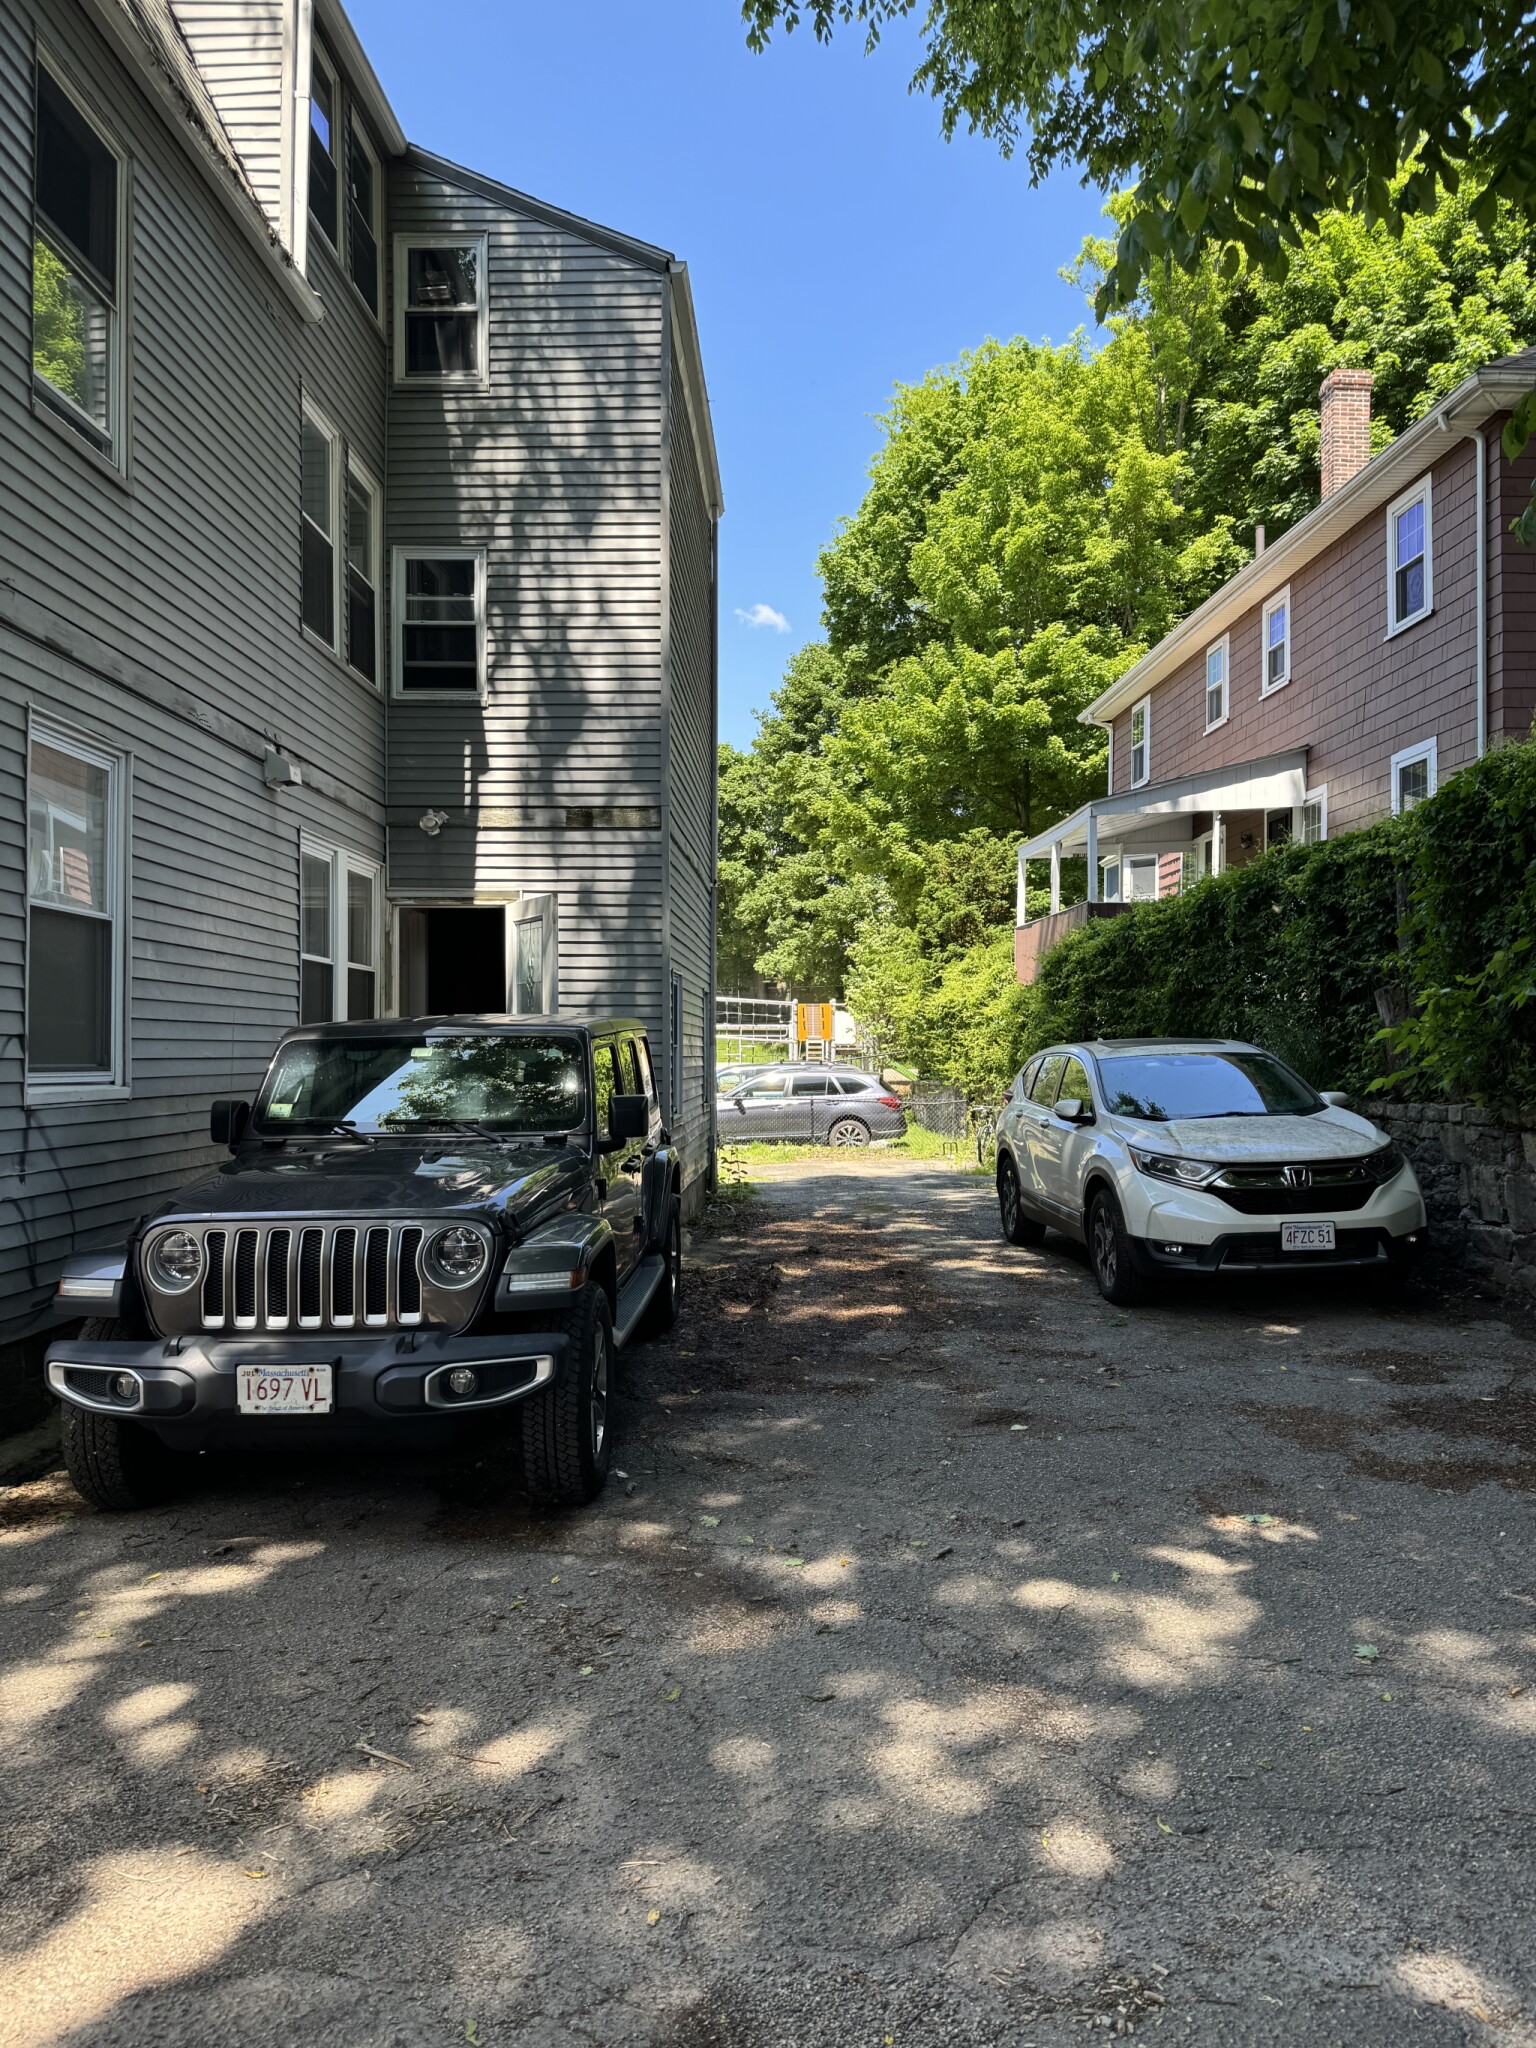 Photos of apartment on Garrison,Brookline MA 02445